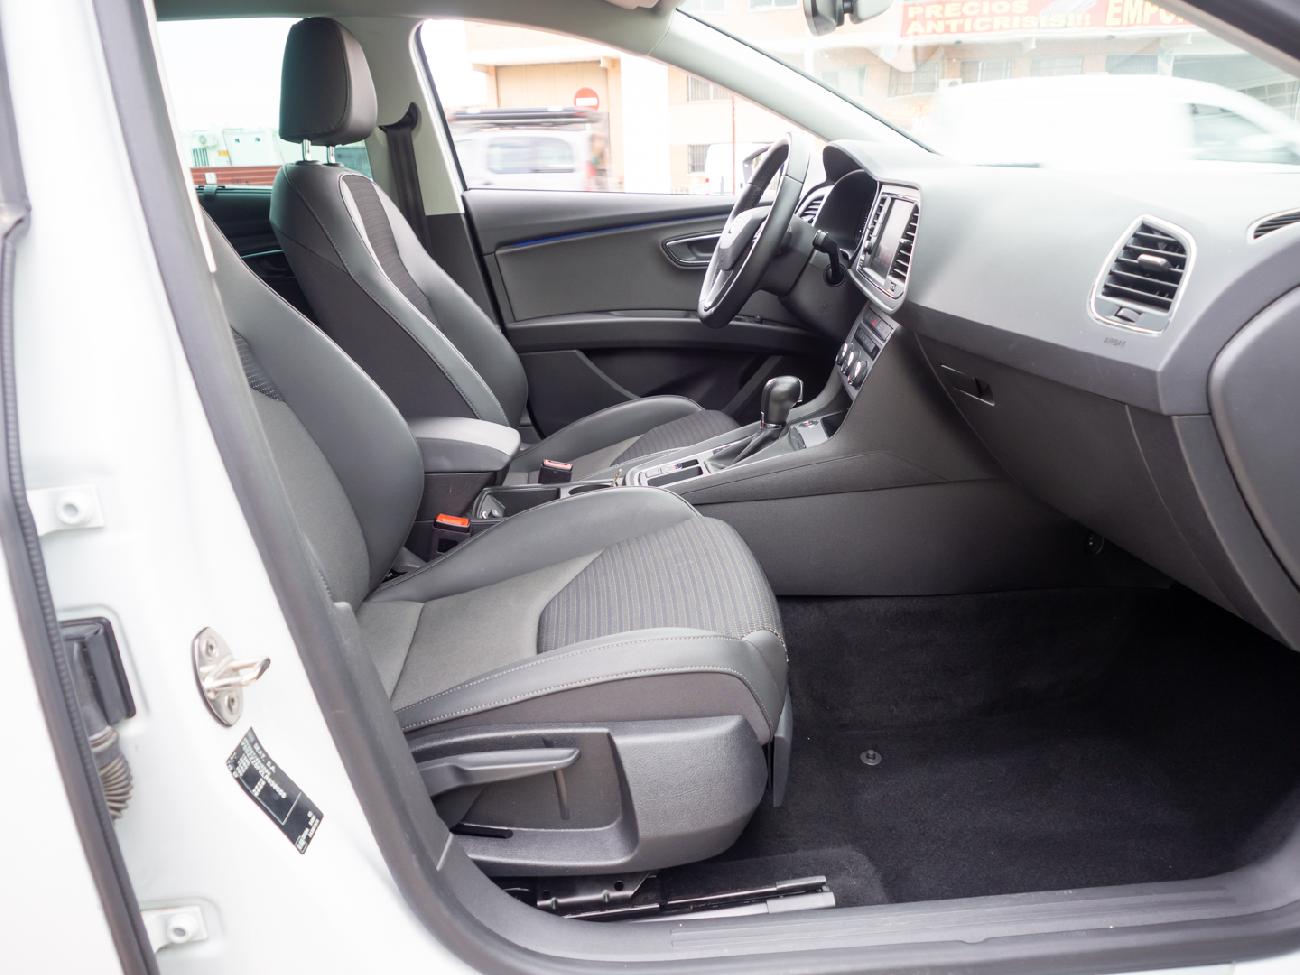 2019 Seat Leon Leon 2.0 TDI 110kW DSG-7 S&S Xcel Ed Plus coche de segunda mano